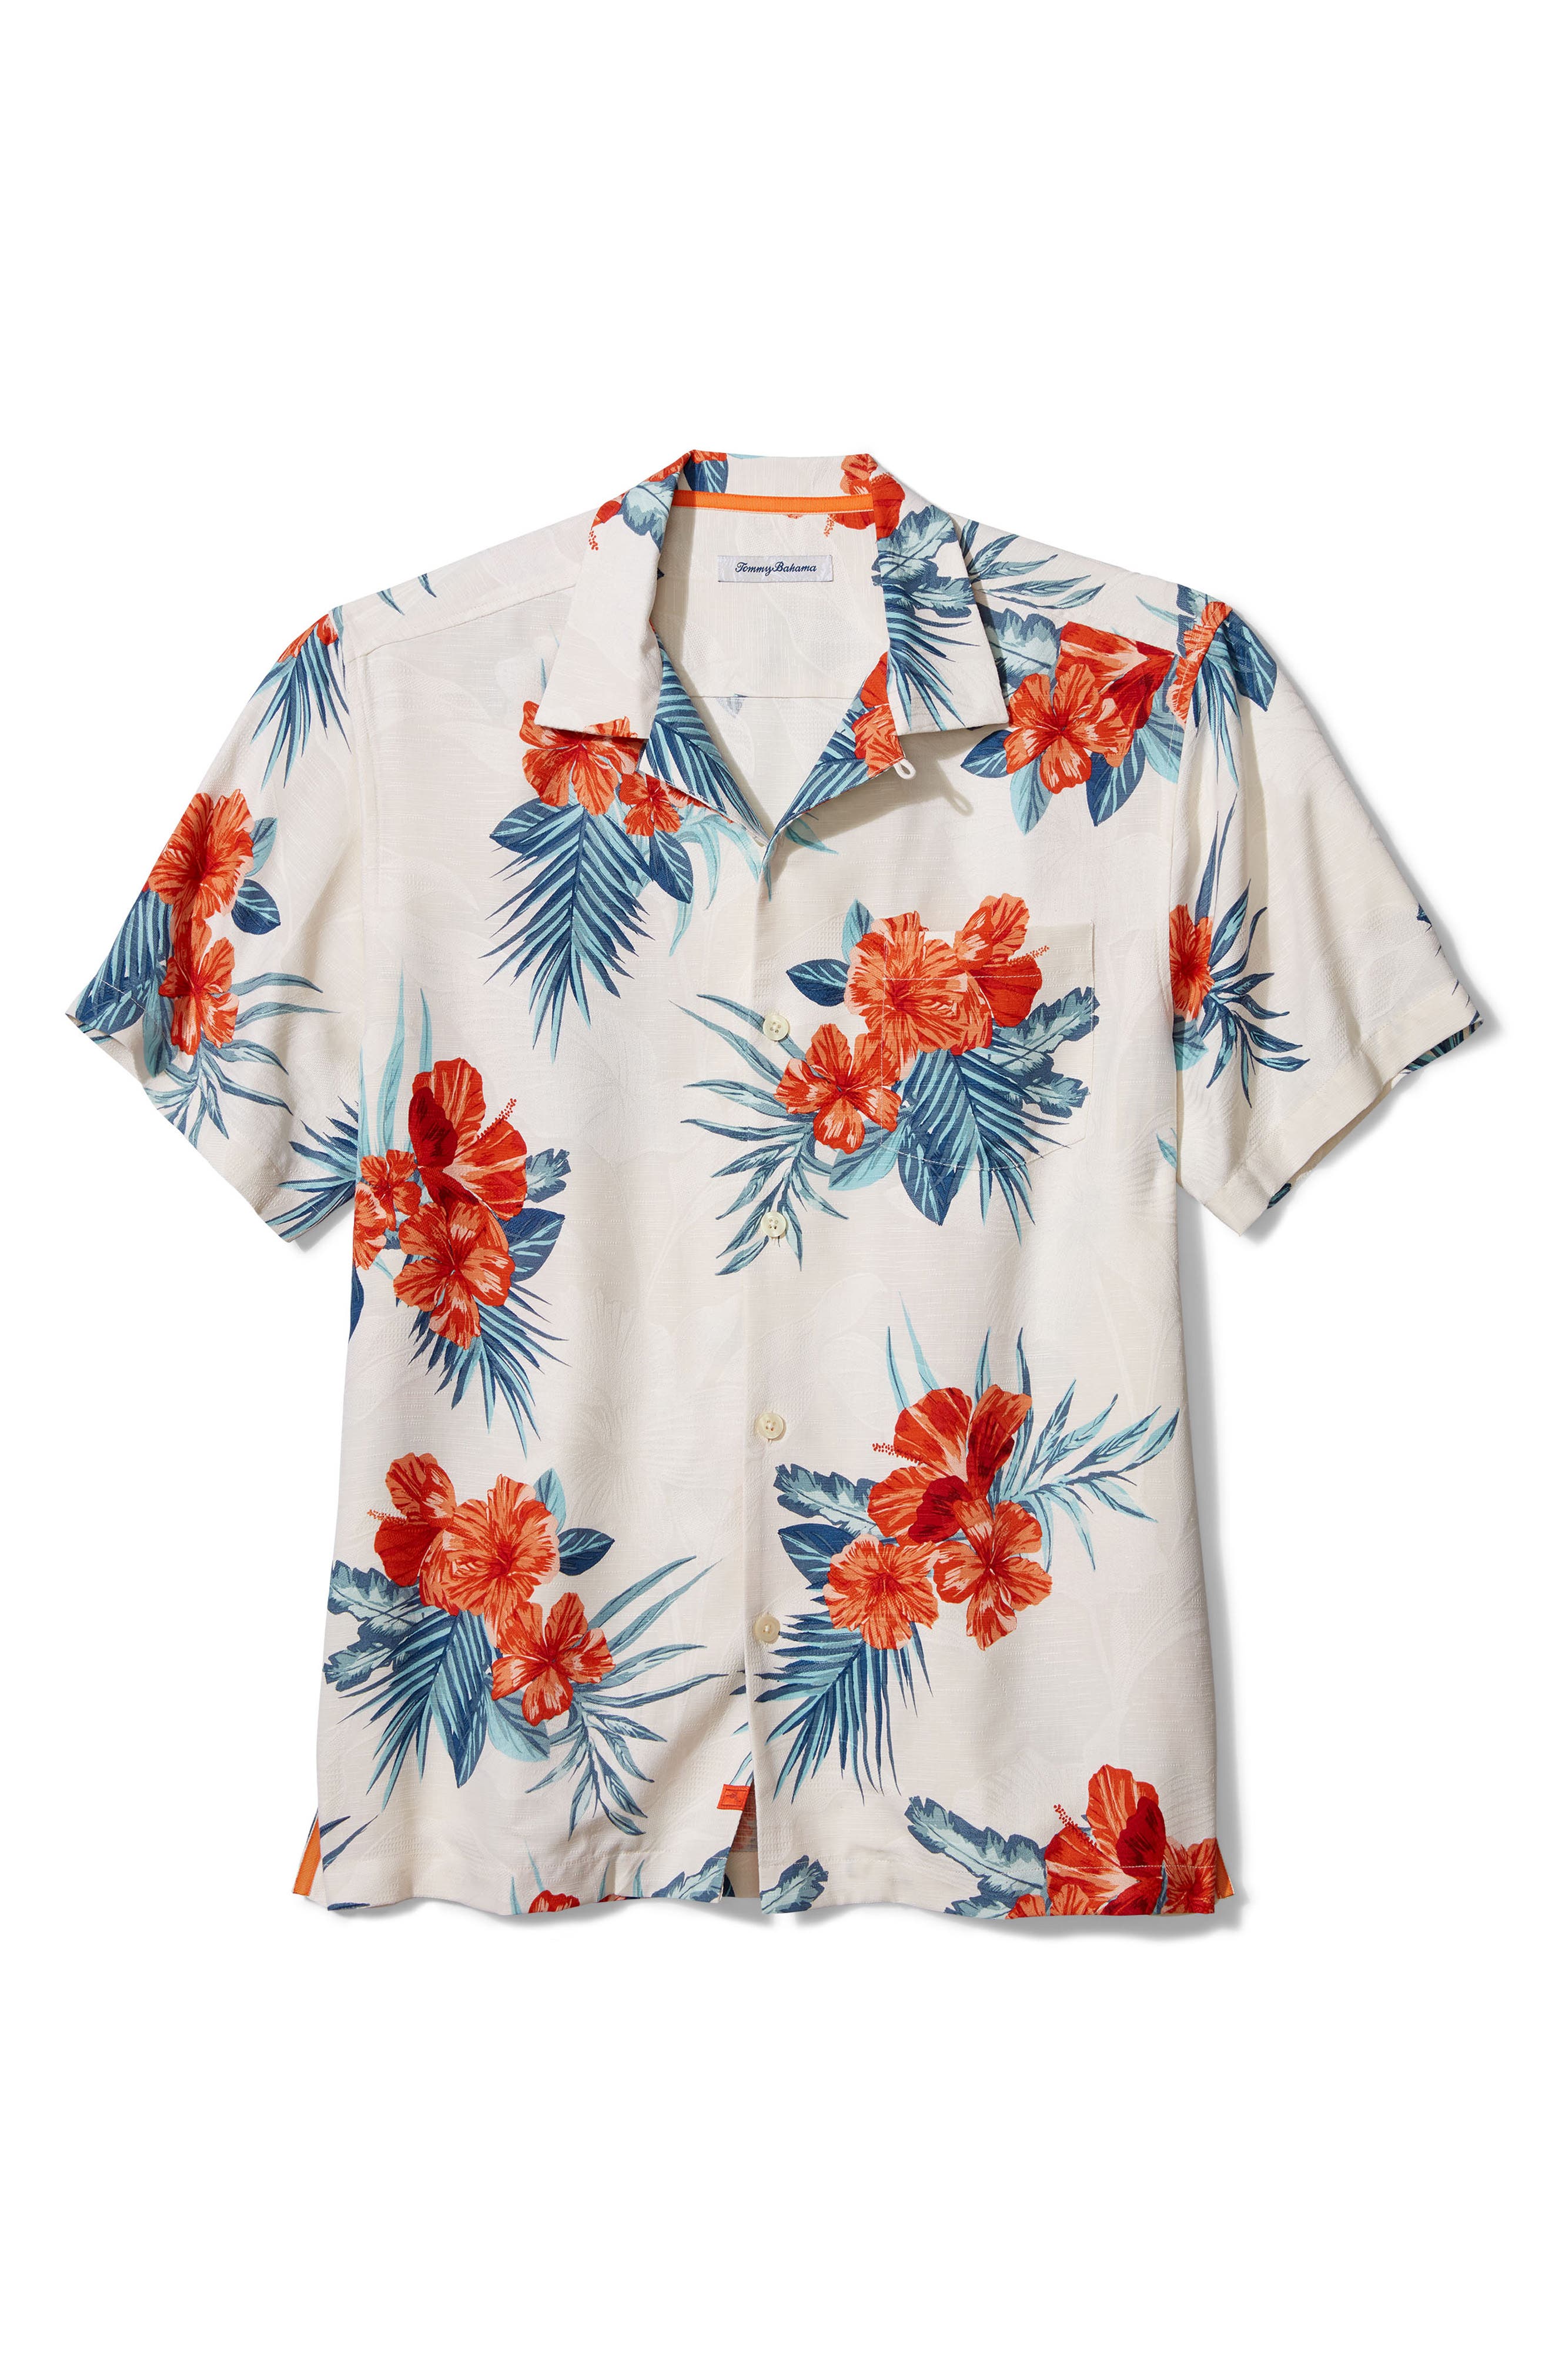 tommy bahama men's short sleeve shirts